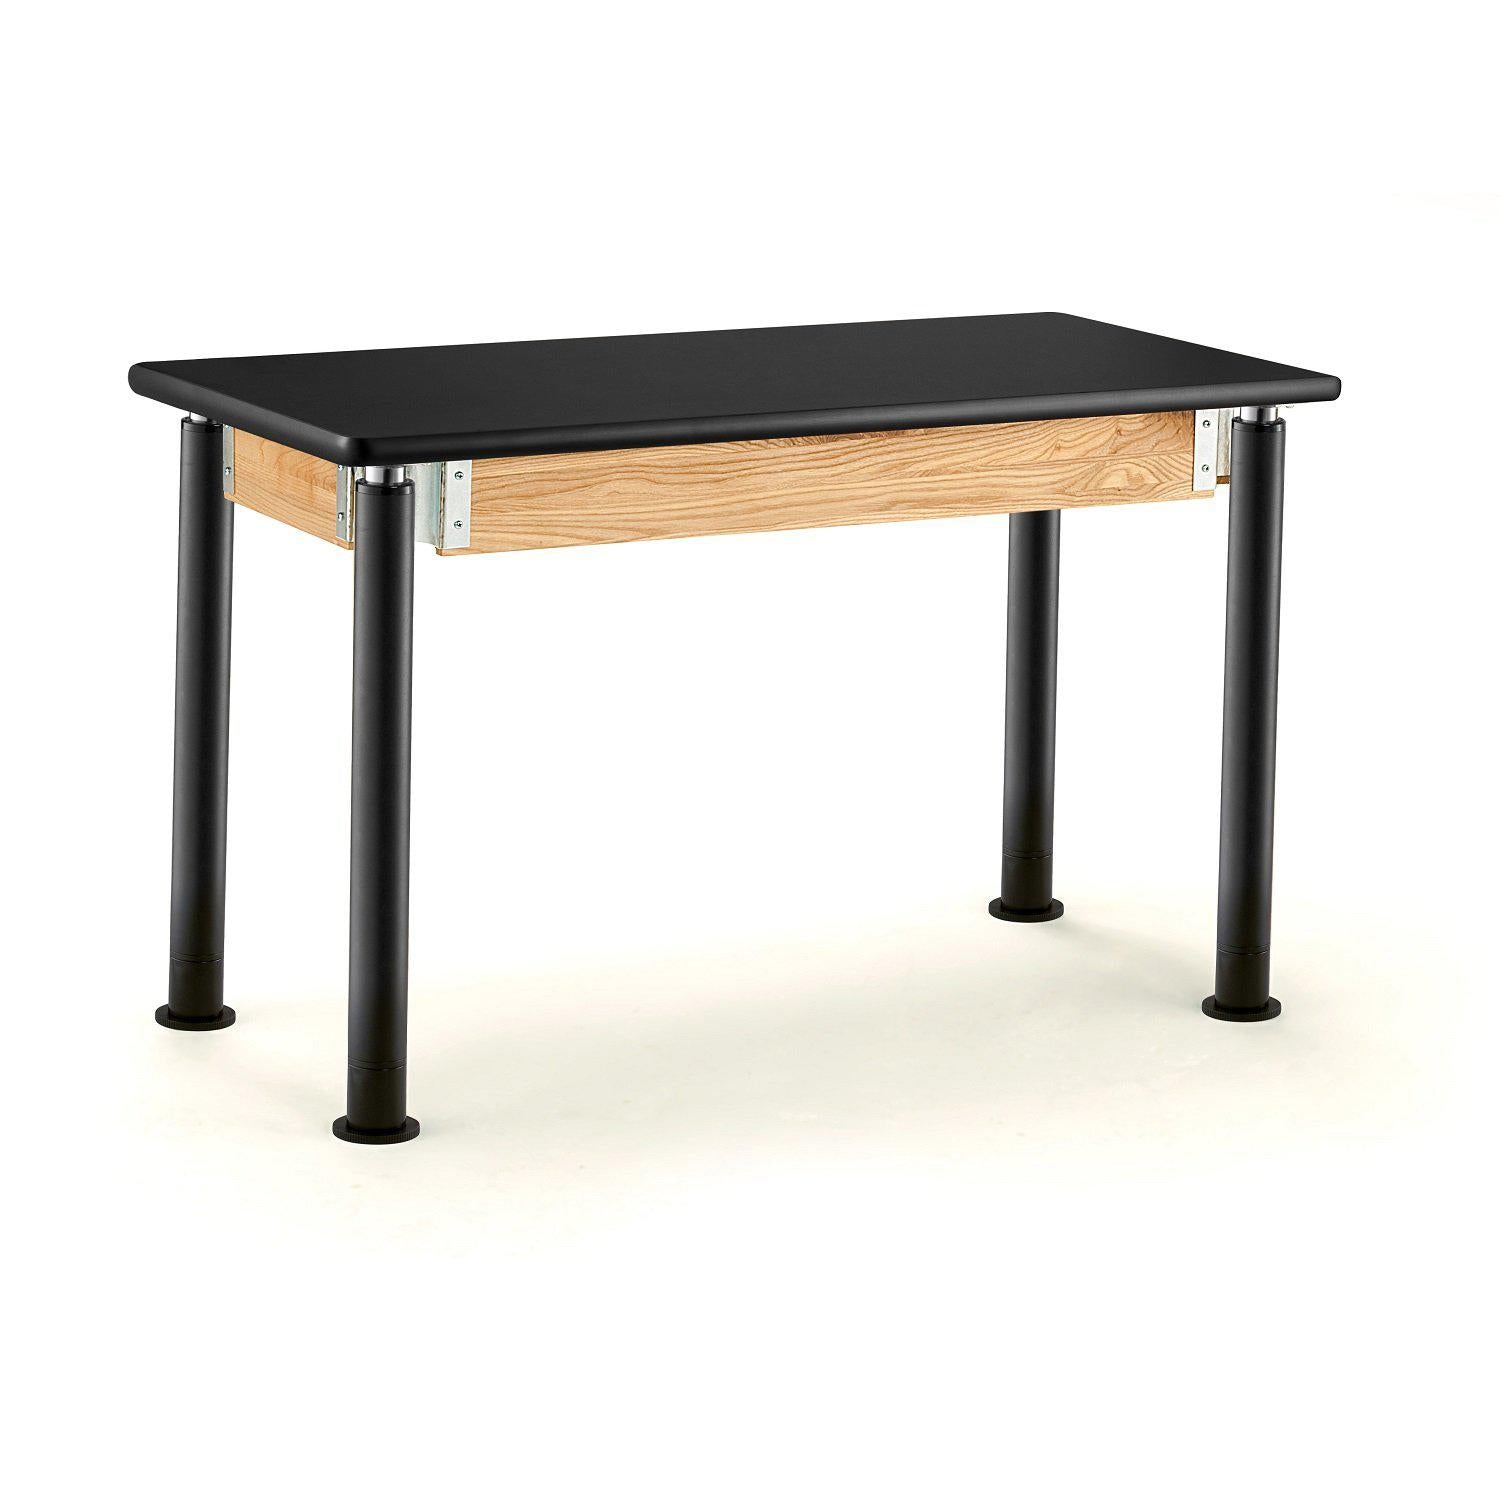 Signature Series Adjustable Height Science Lab Table, Textured Black Legs, 30"x60", Black High Pressure Laminate Top